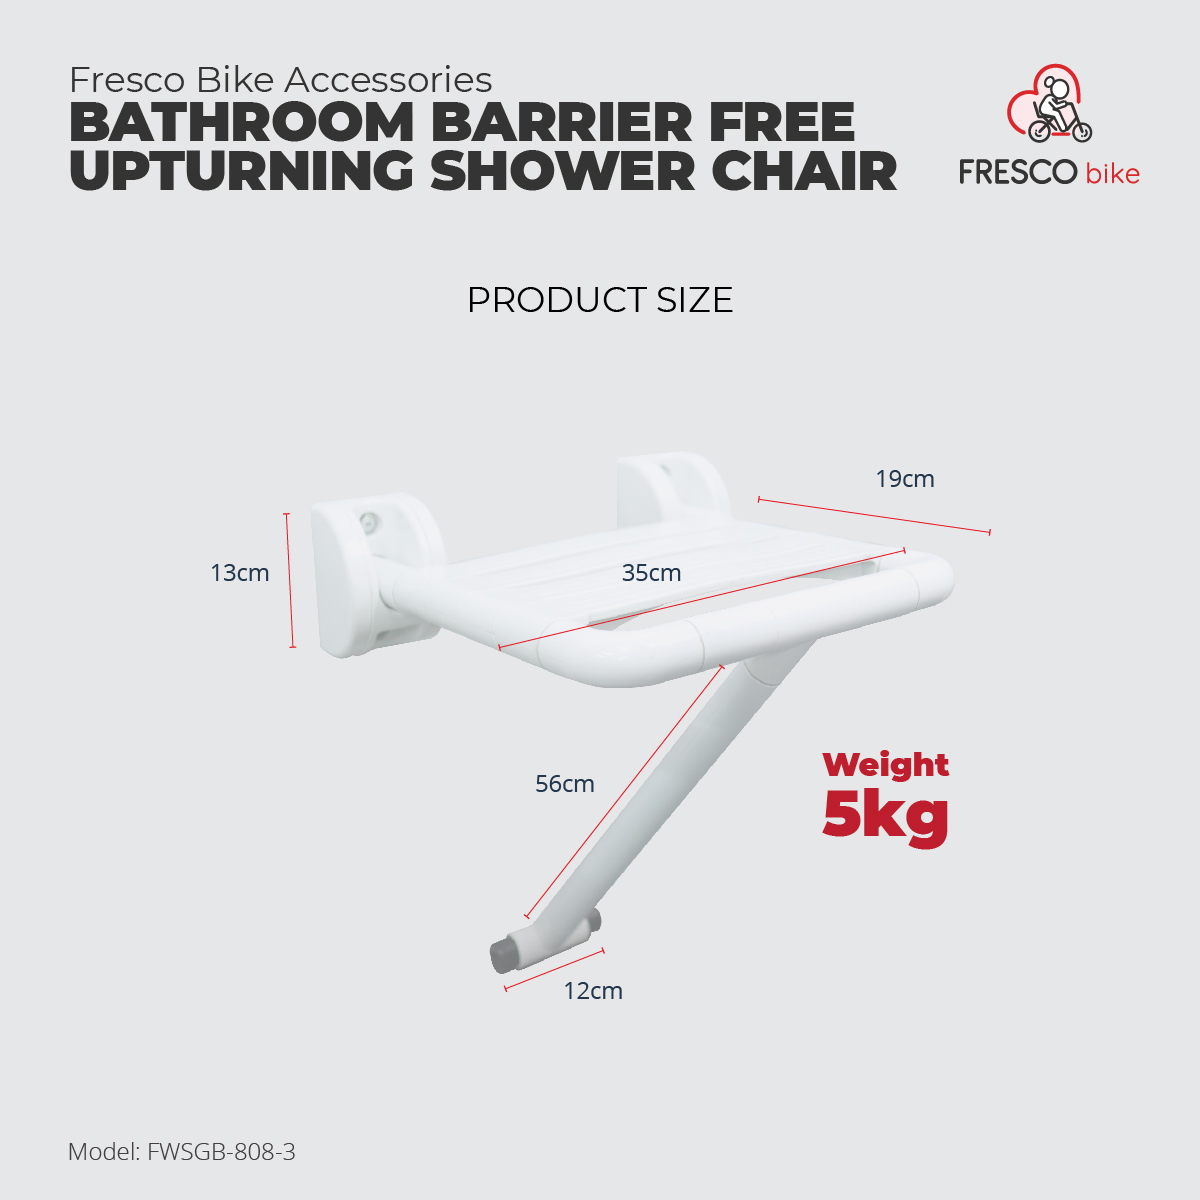 Bathroom Barrier Free Upturning Shower Chair Bathroom